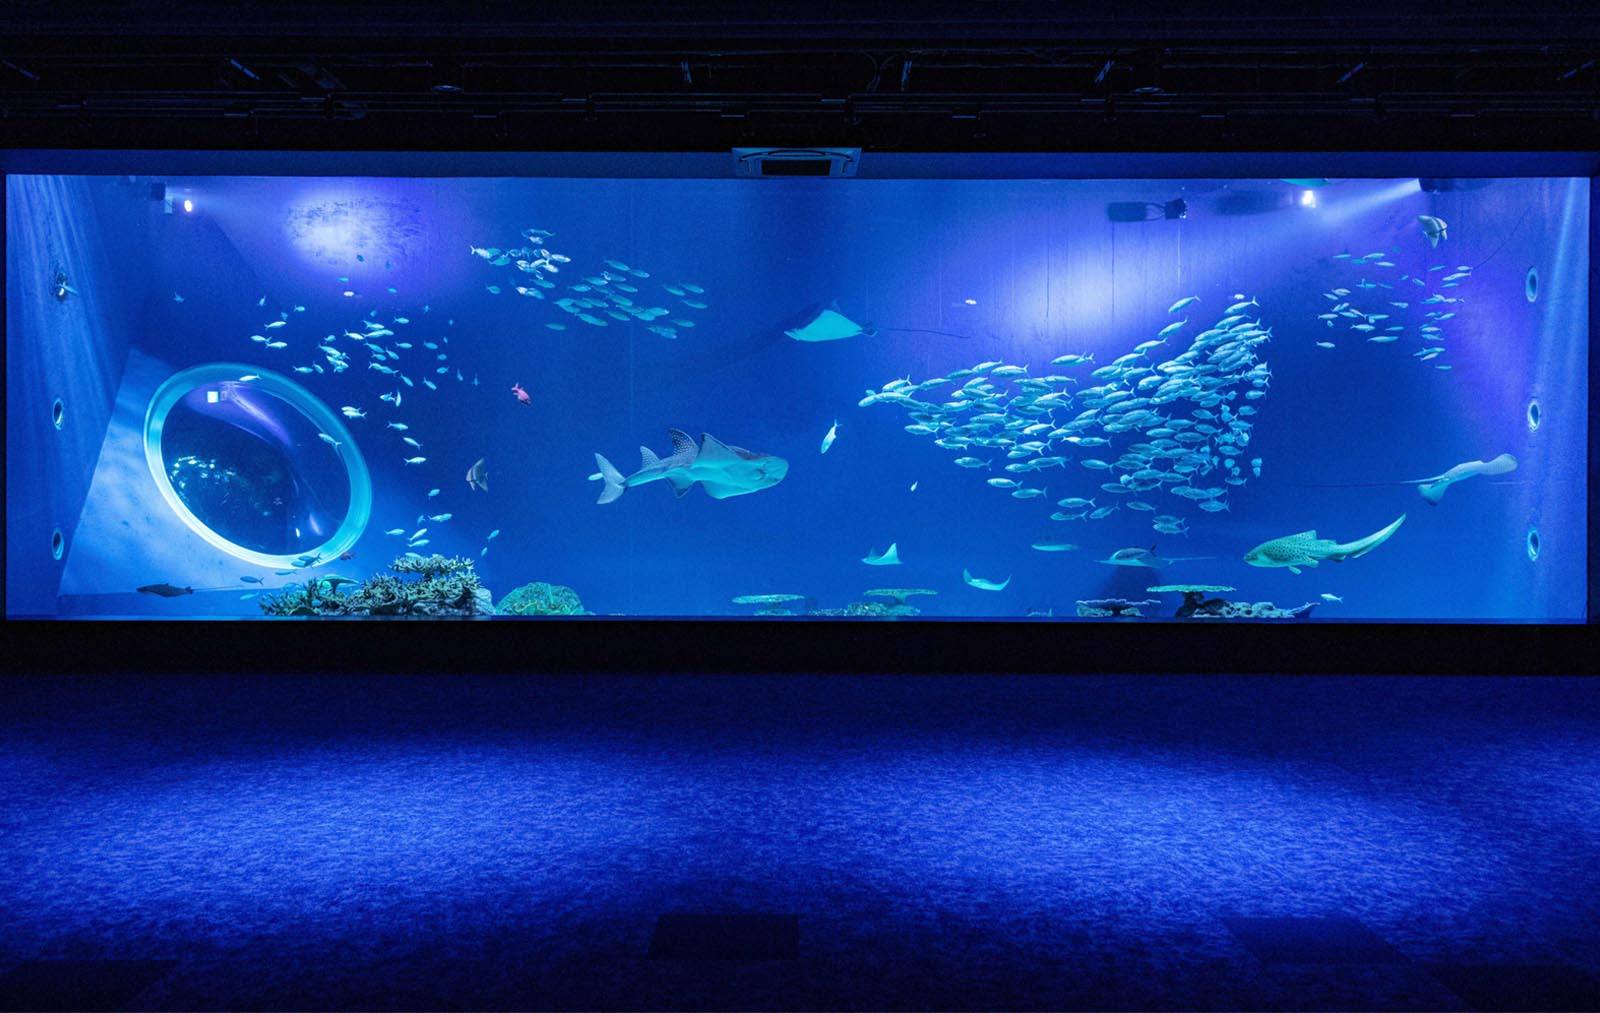 DMM Kariyushi Aquarium in Okinawa, Japan